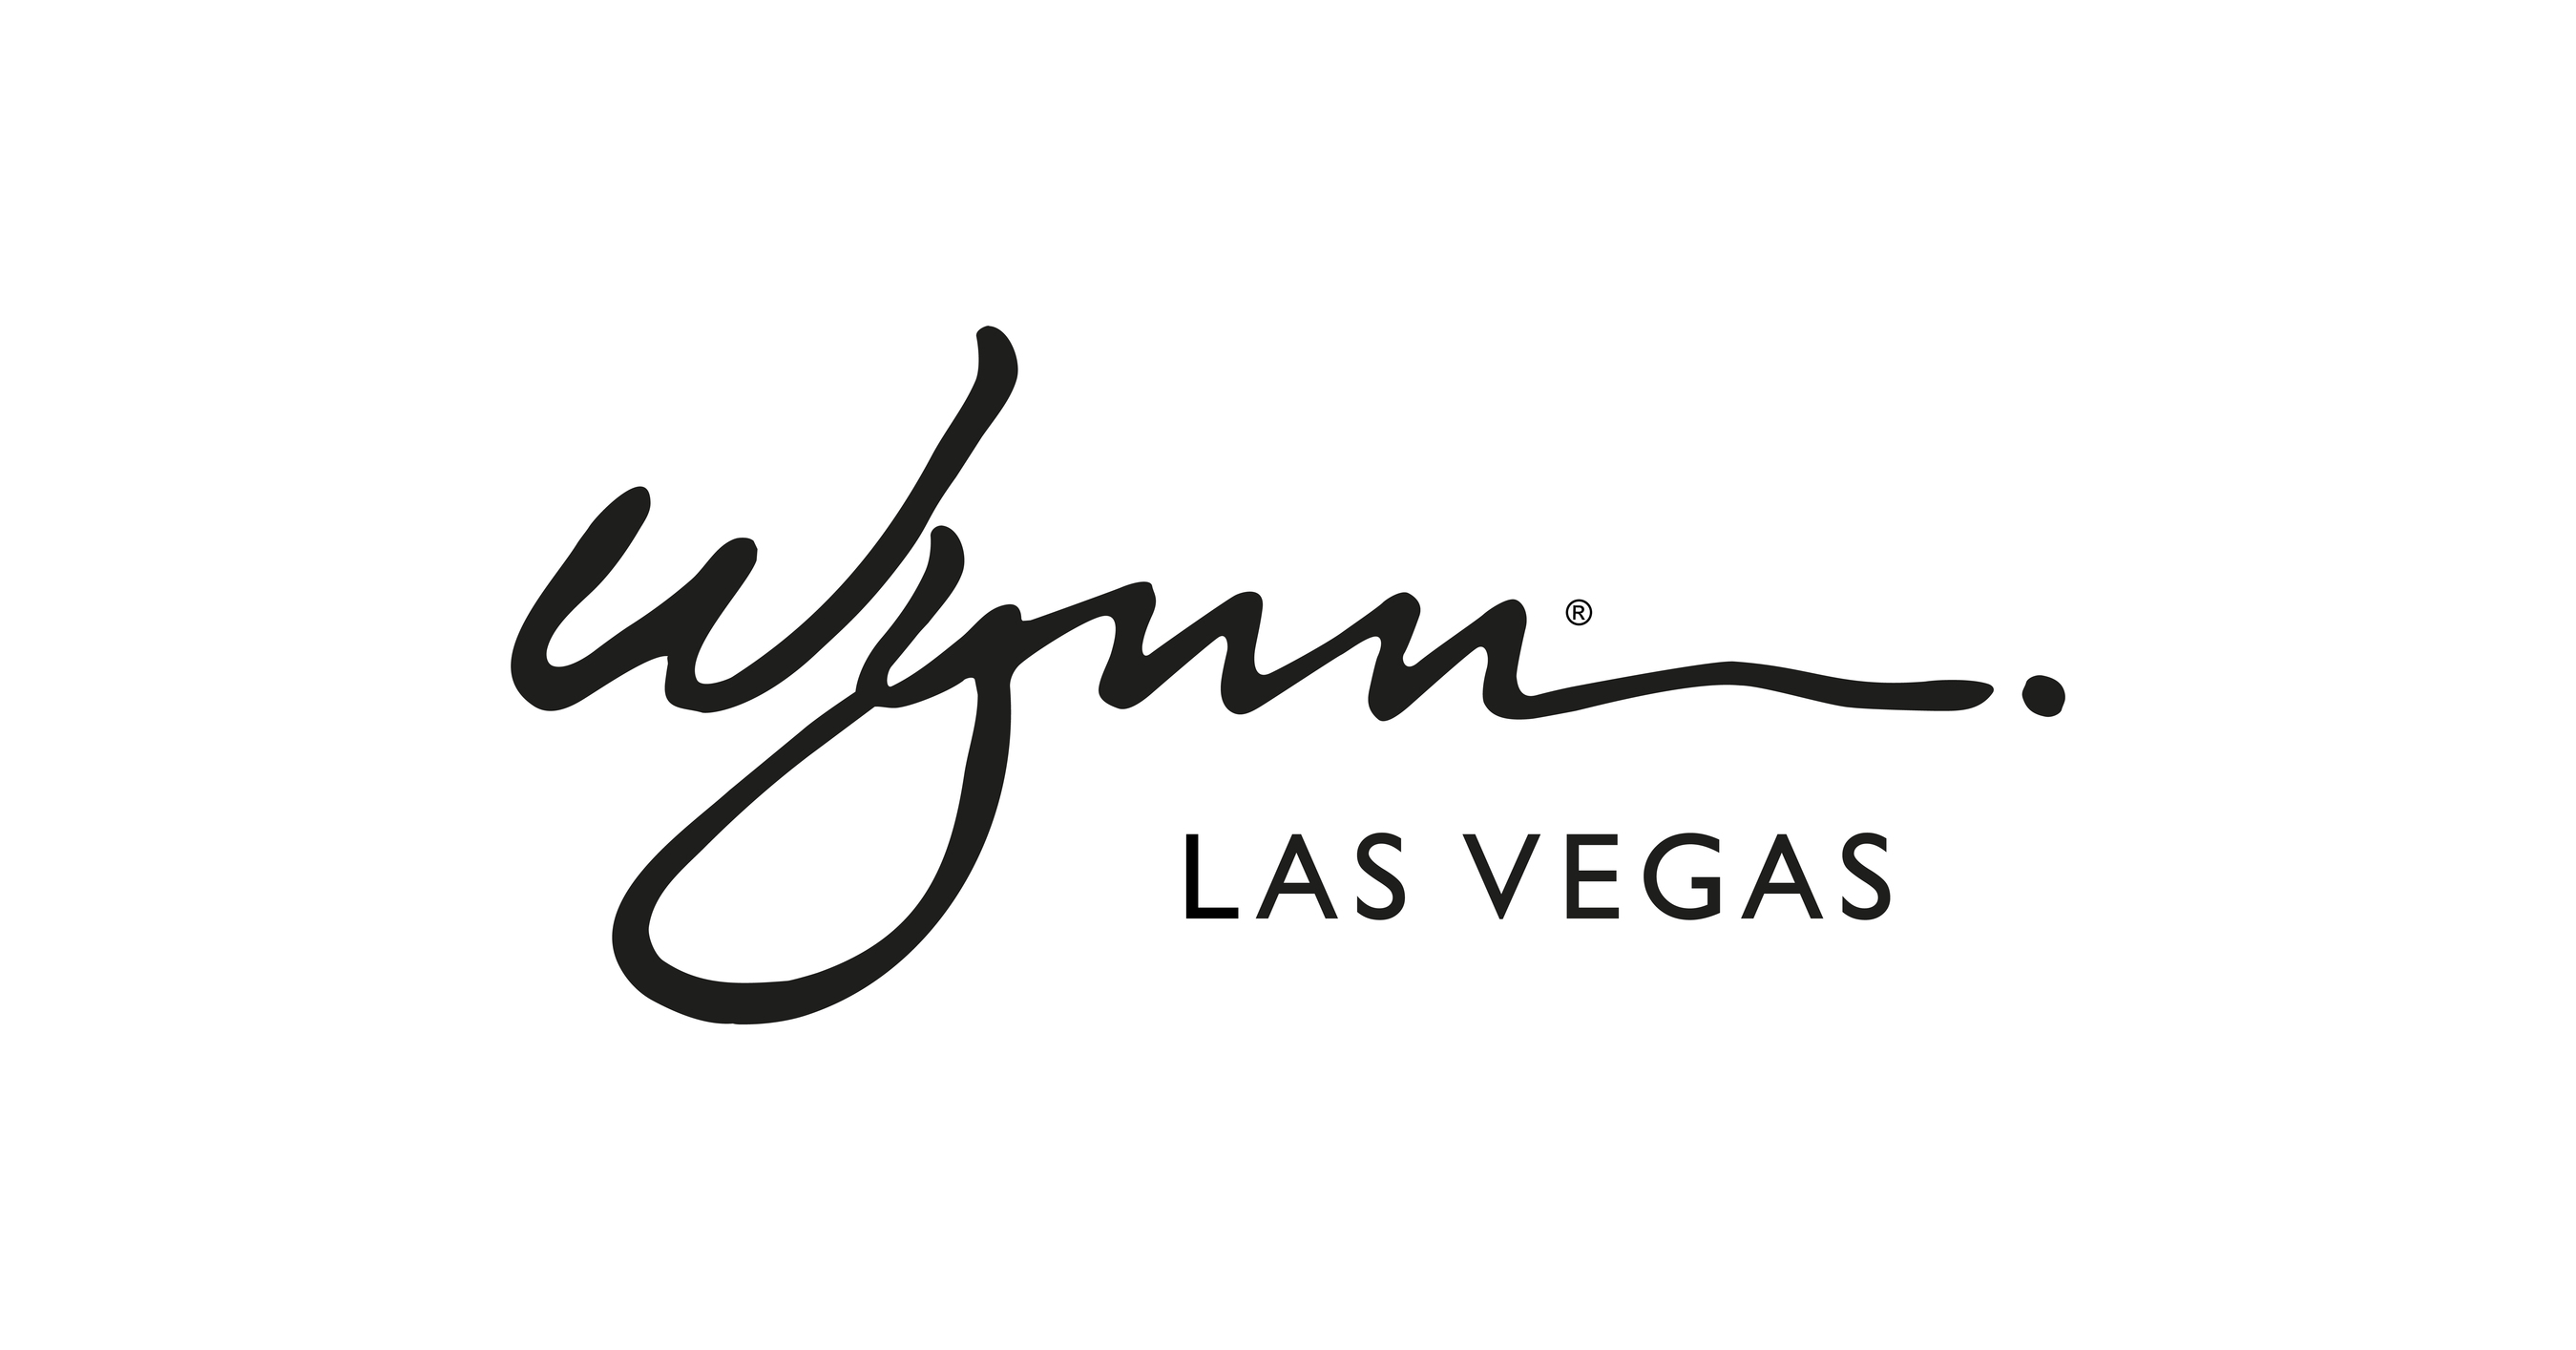 TB12, Tom Brady Wellness Brand, Offering Coaching At Wynn Las Vegas